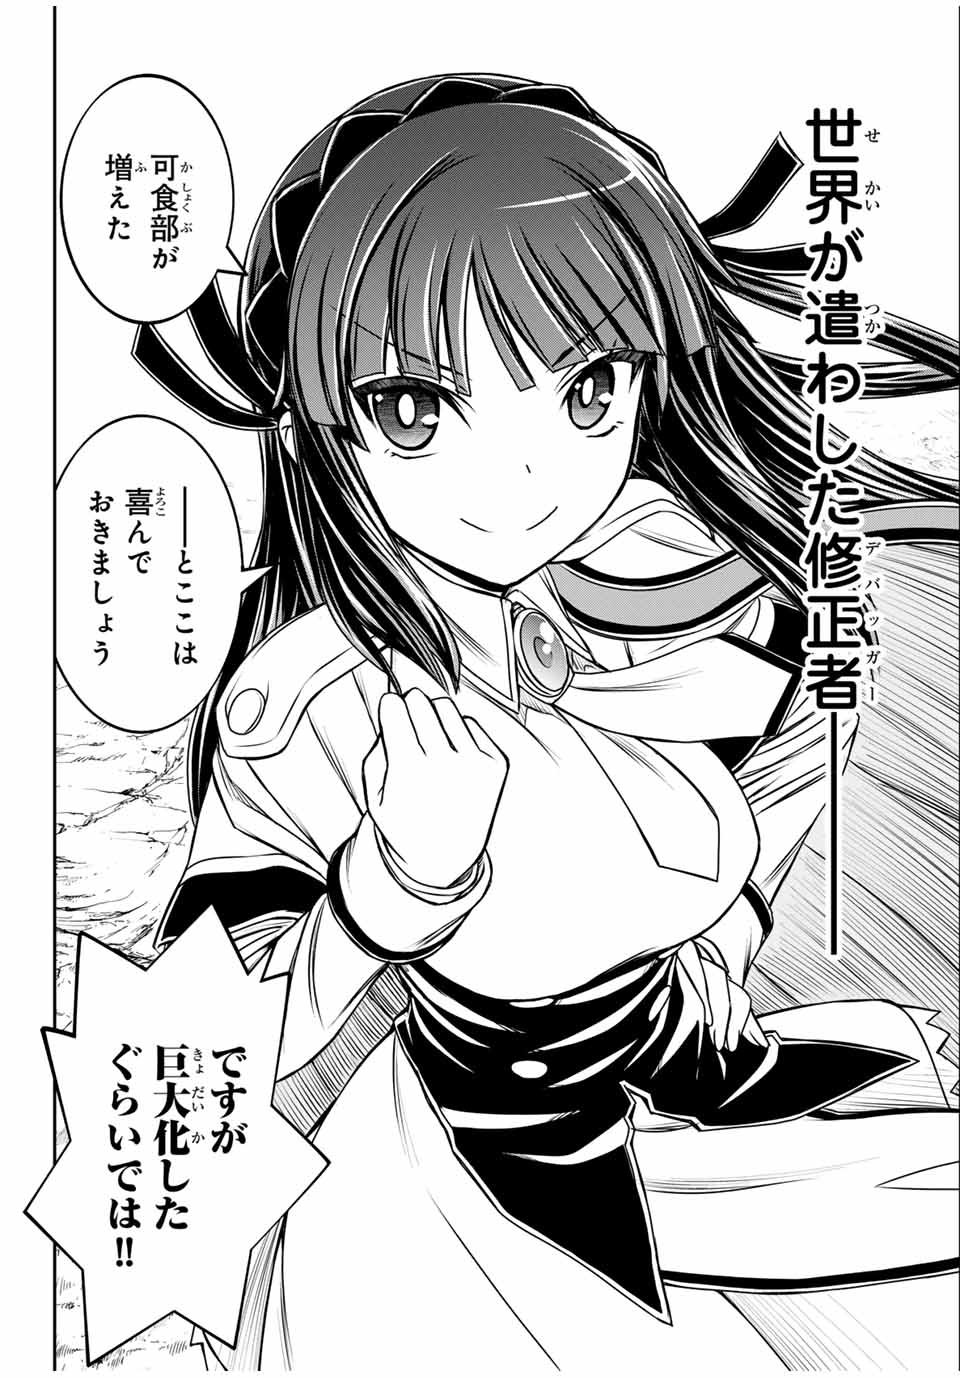 Nengan no Akuyaku Reijou (Last Boss) no Karada wo Teniiretazo!  - Chapter 23 - Page 6